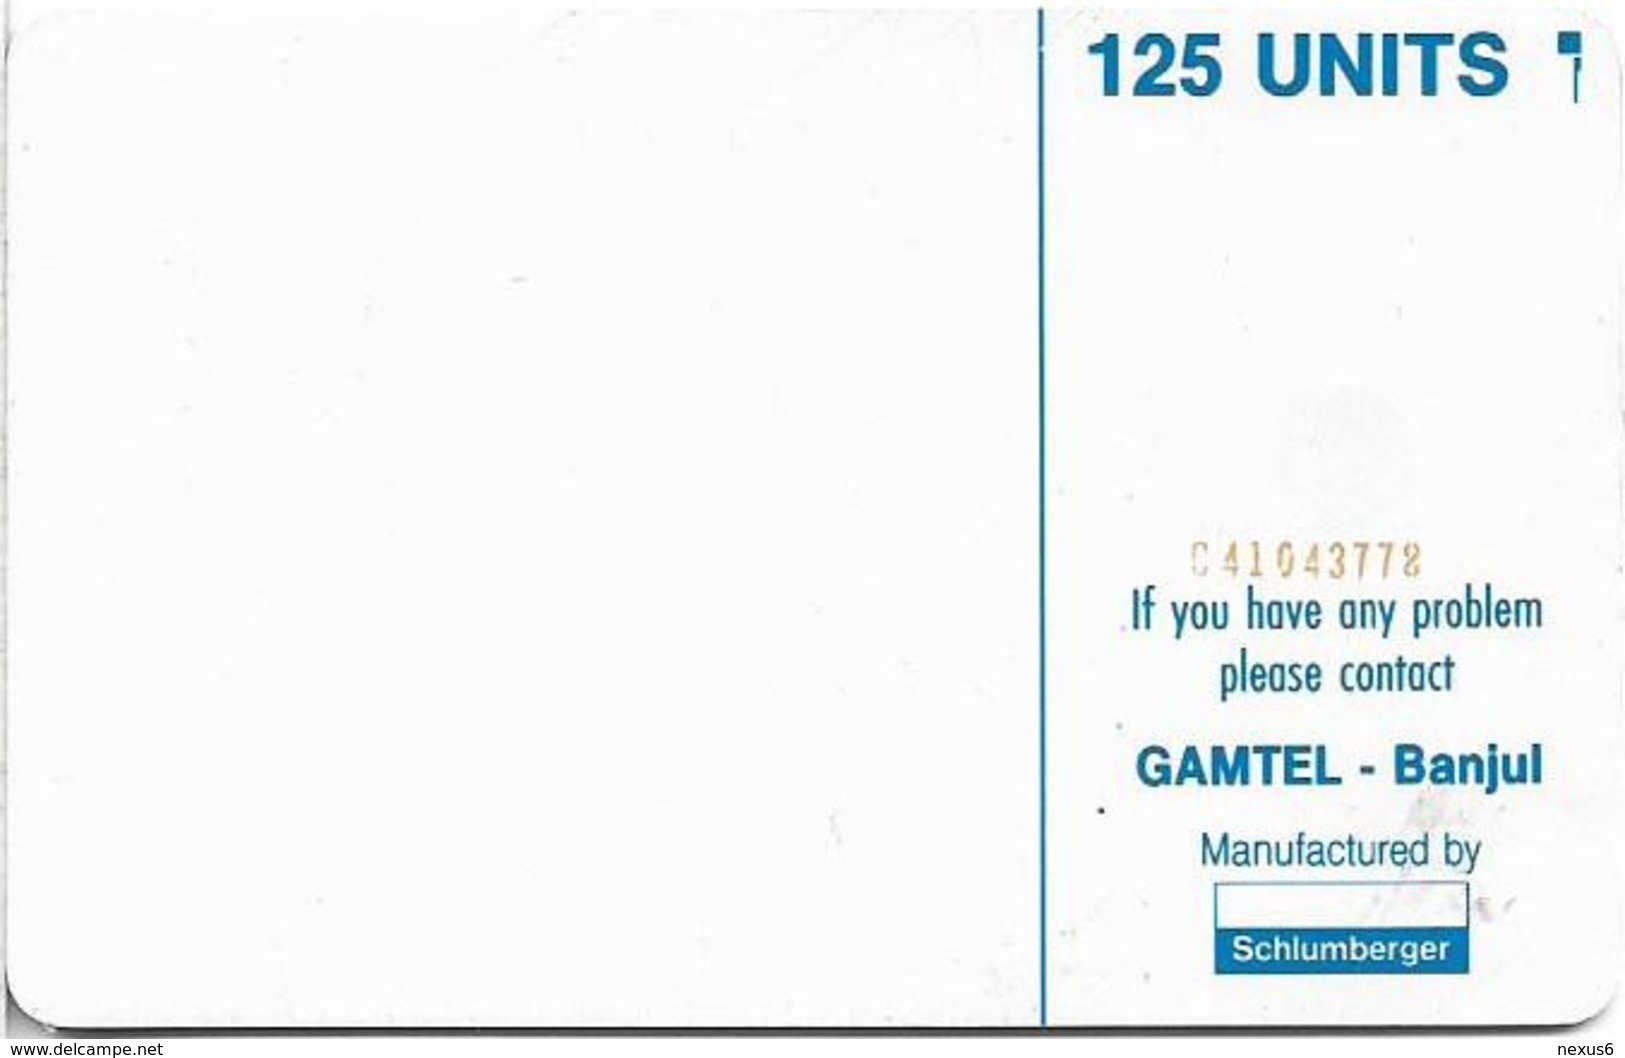 Gambia - Gamtel - Logo Orange, 125Units, SC5 ISO, Cn. C41043778 Red, No Hole On Rev, Matt Surface, Used - Gambia